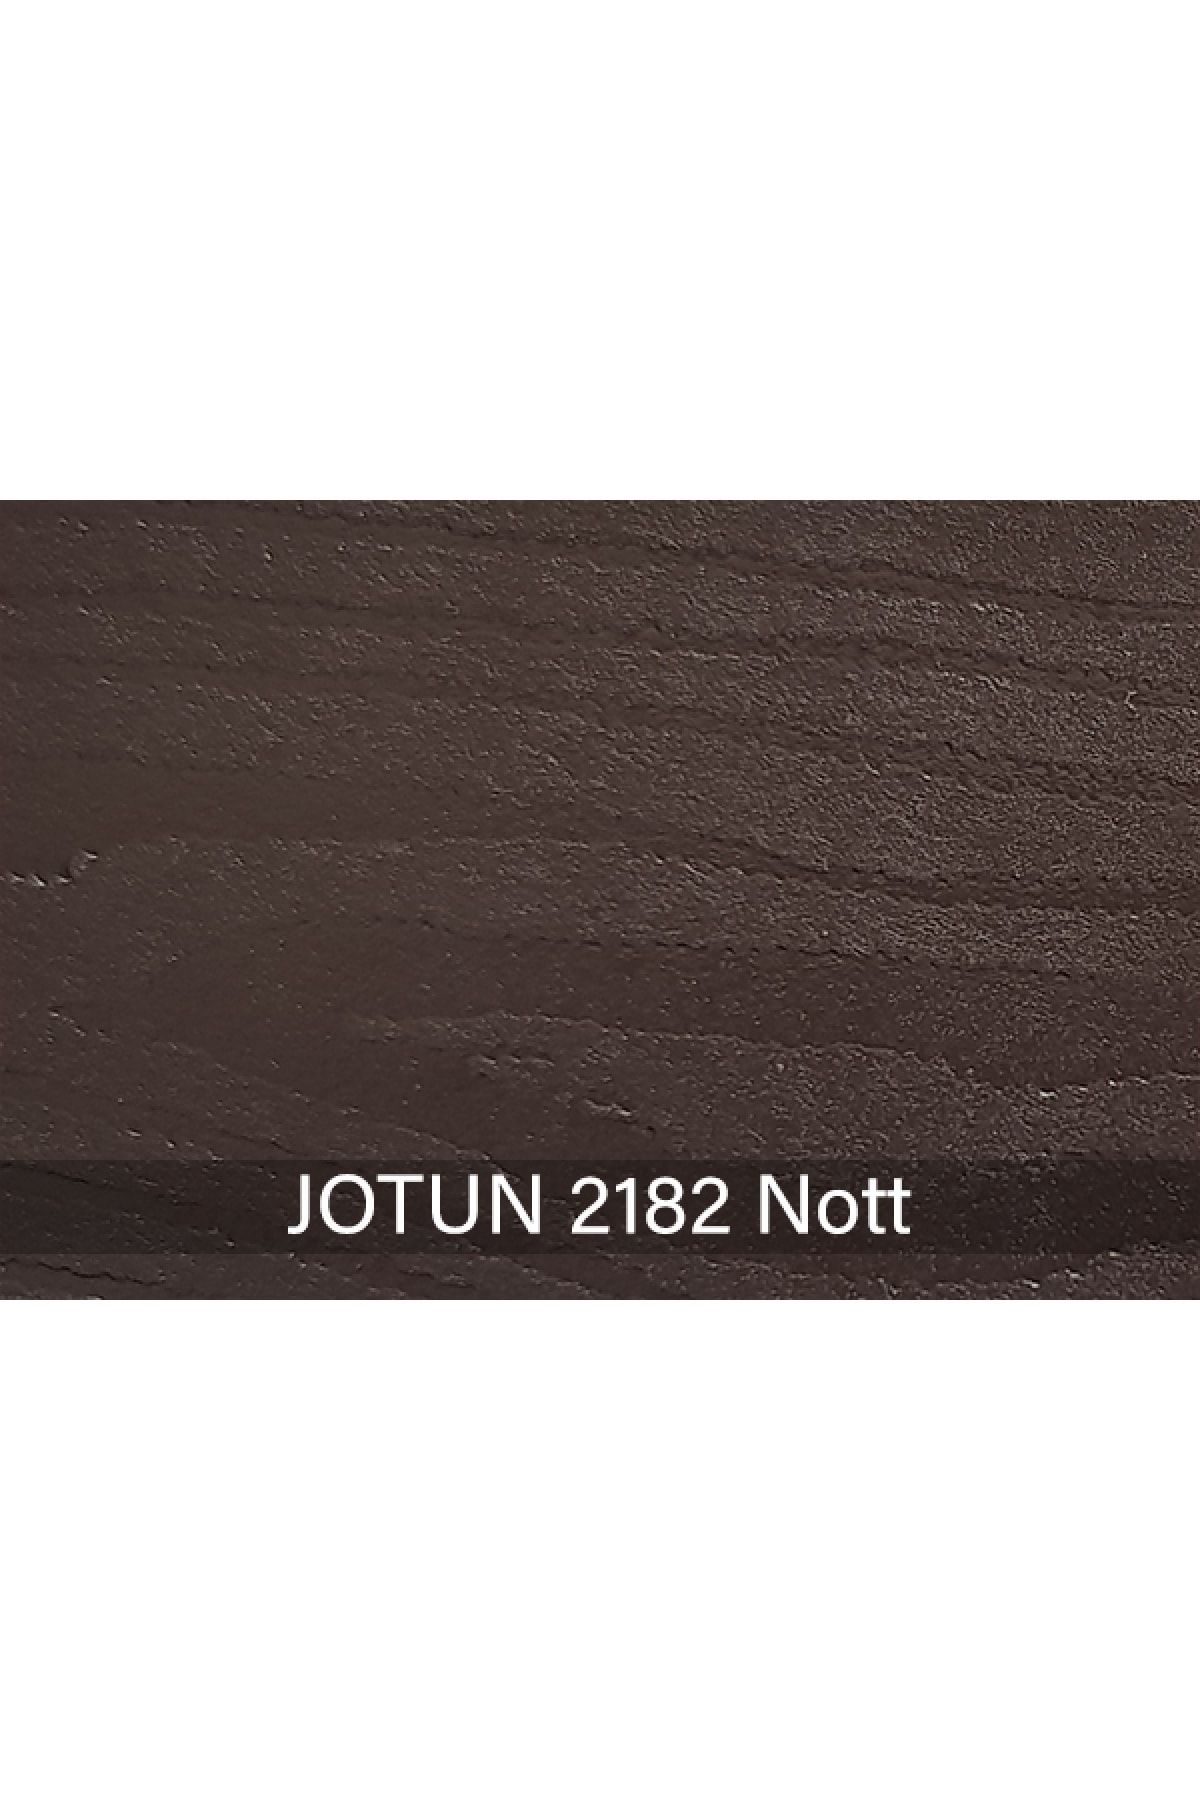 Jotun Nott 2182 Demidekk Ultimate Fönster Ahşap Boyası 1 Lt